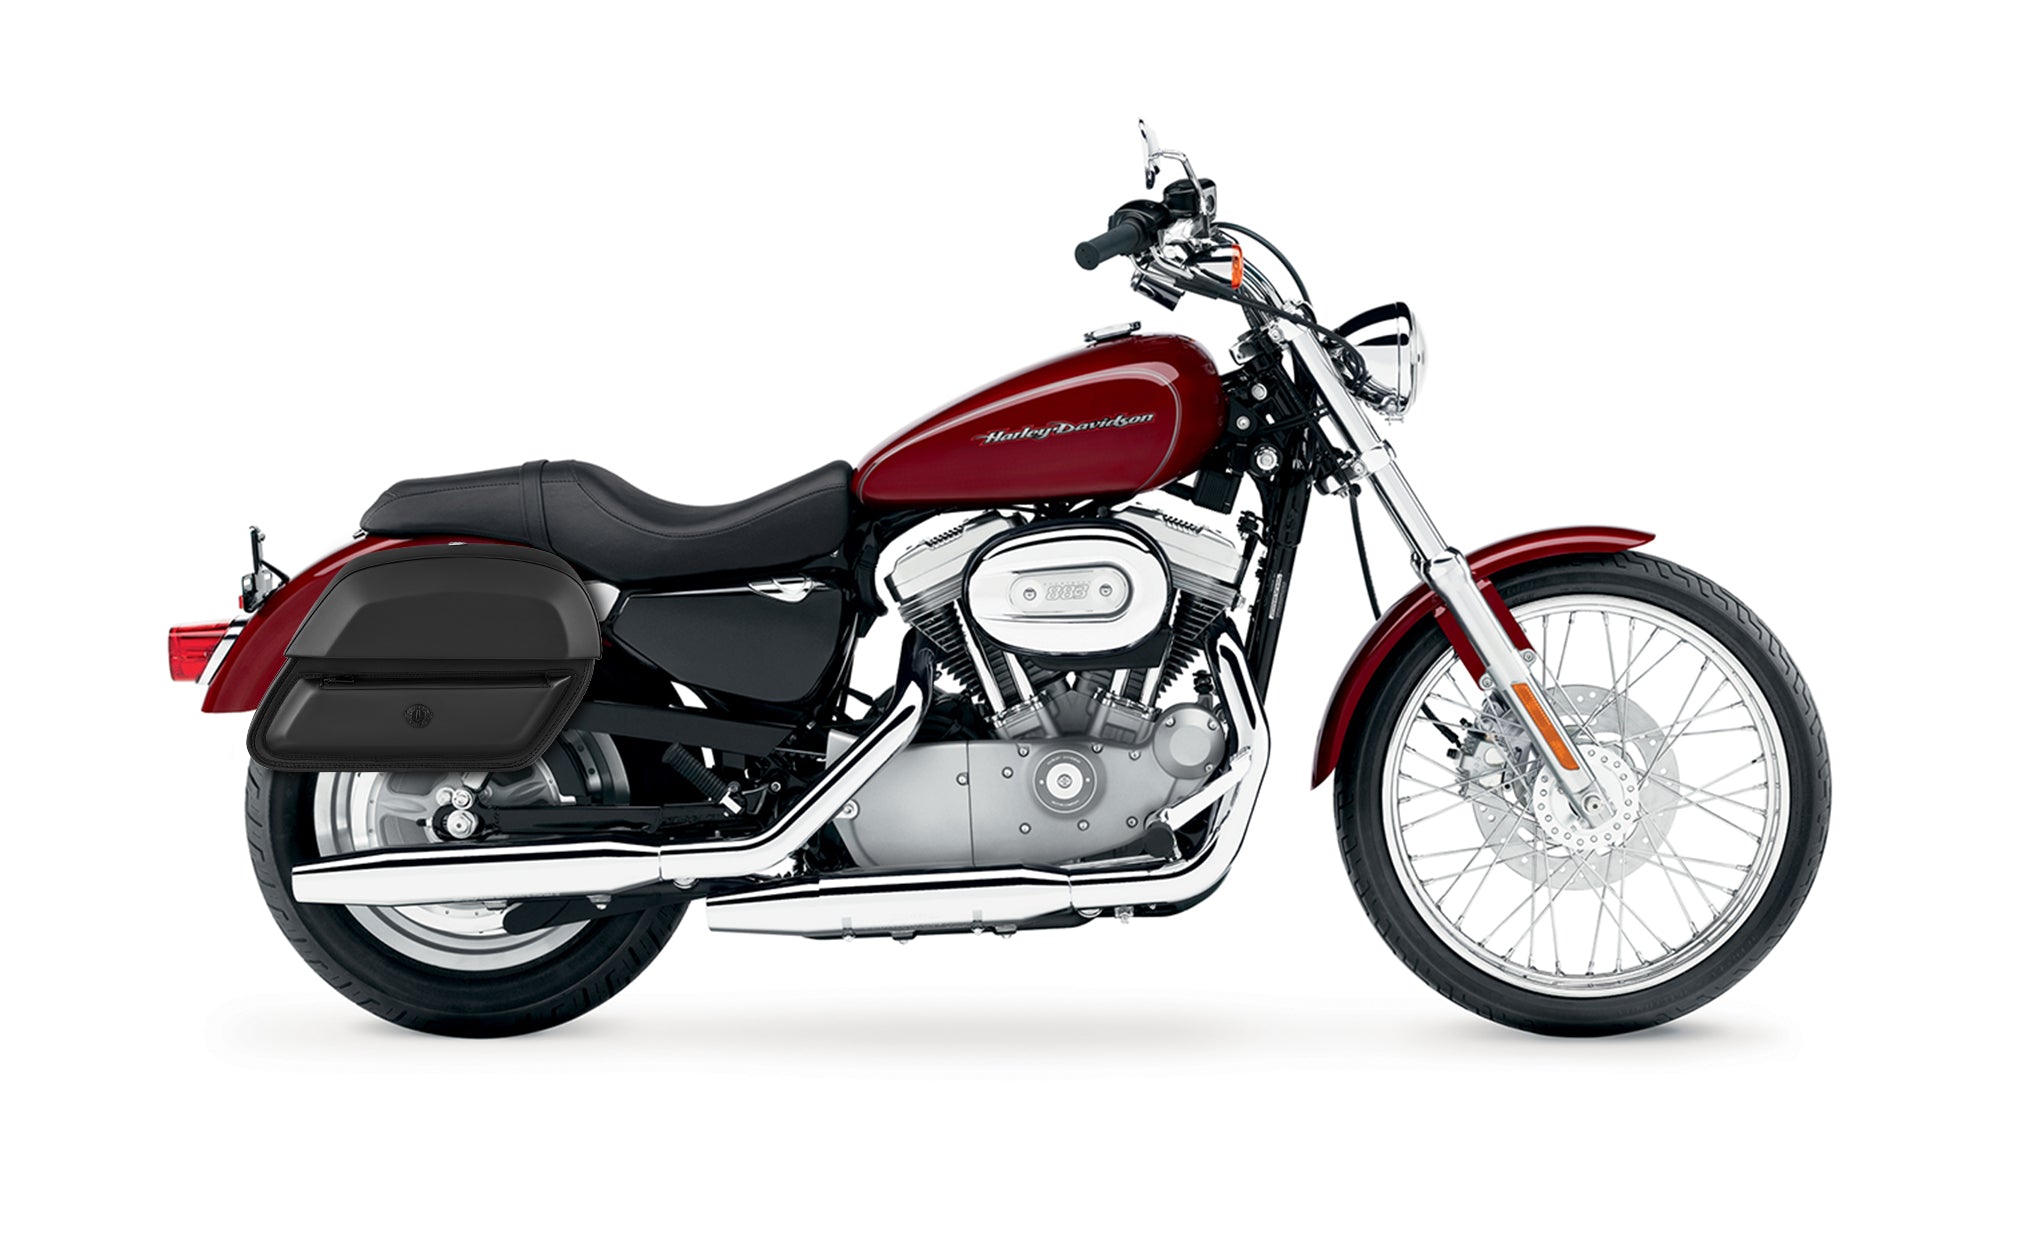 28L - Pantheon Medium Quick-Mount Motorcycle Saddlebags For Harley Sportster 883 Custom XL883C/XLH883C @expand